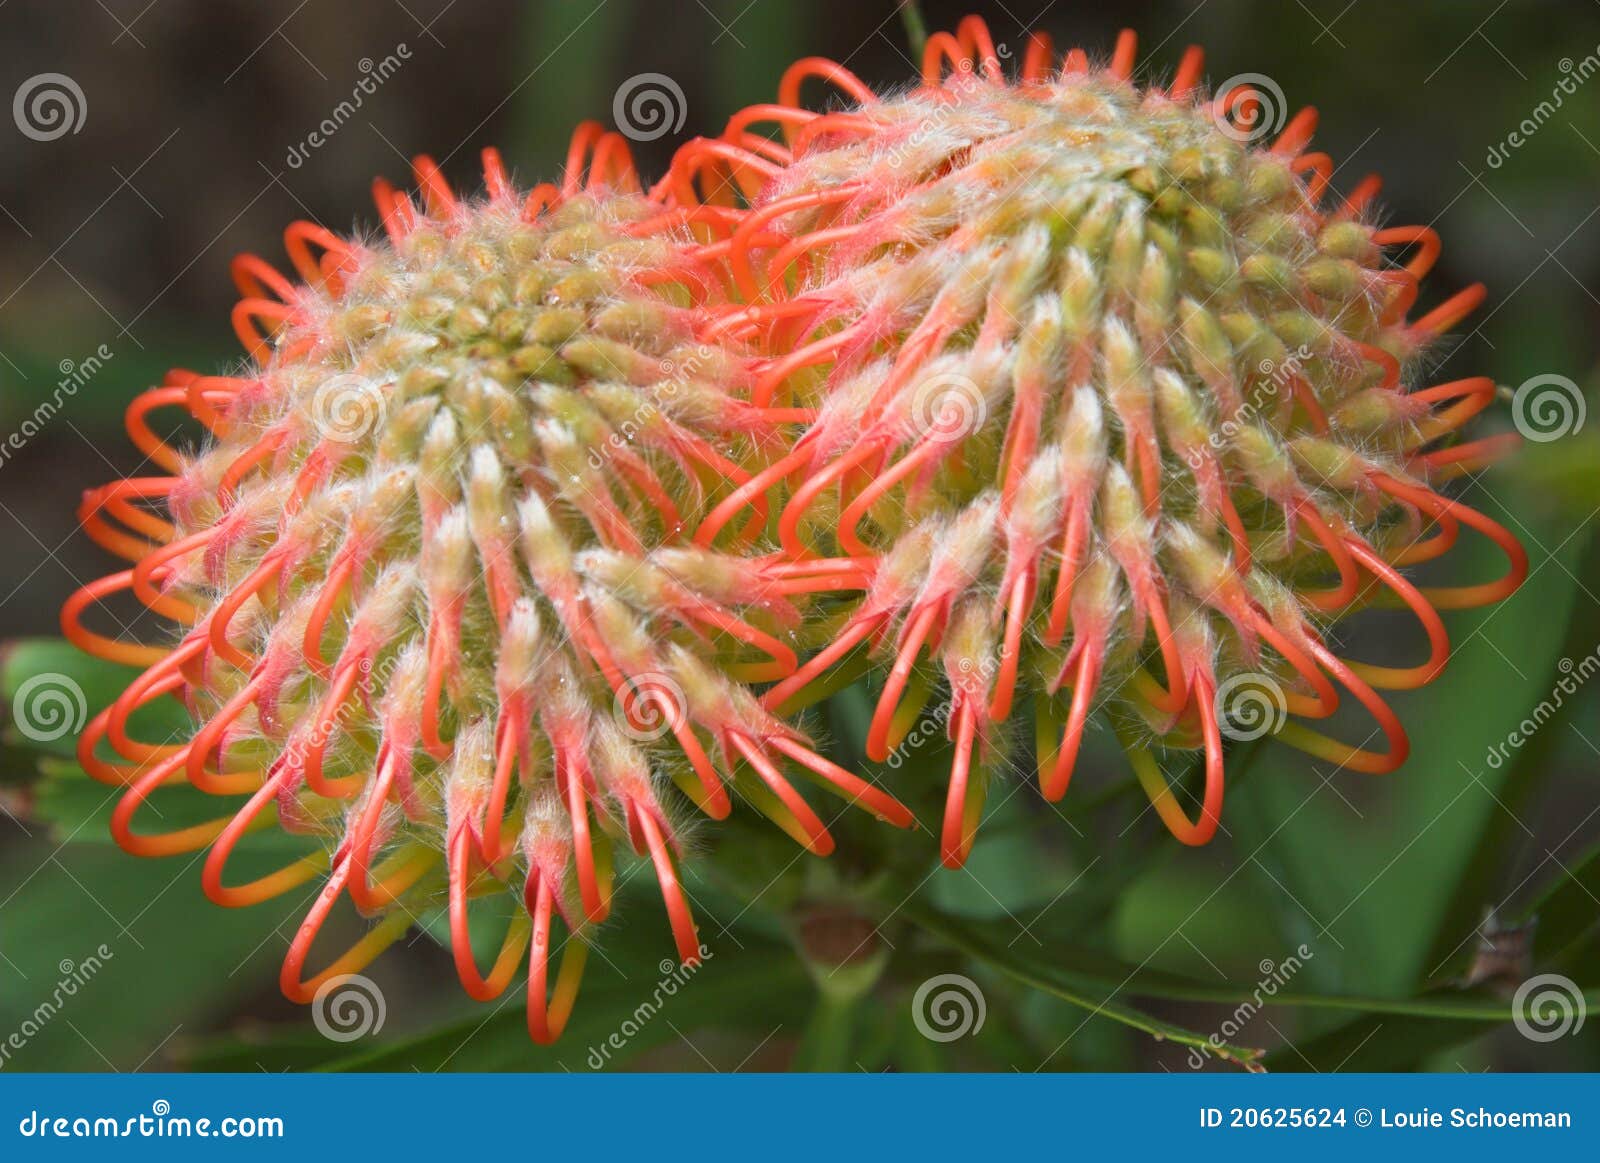 spiky orange flowers